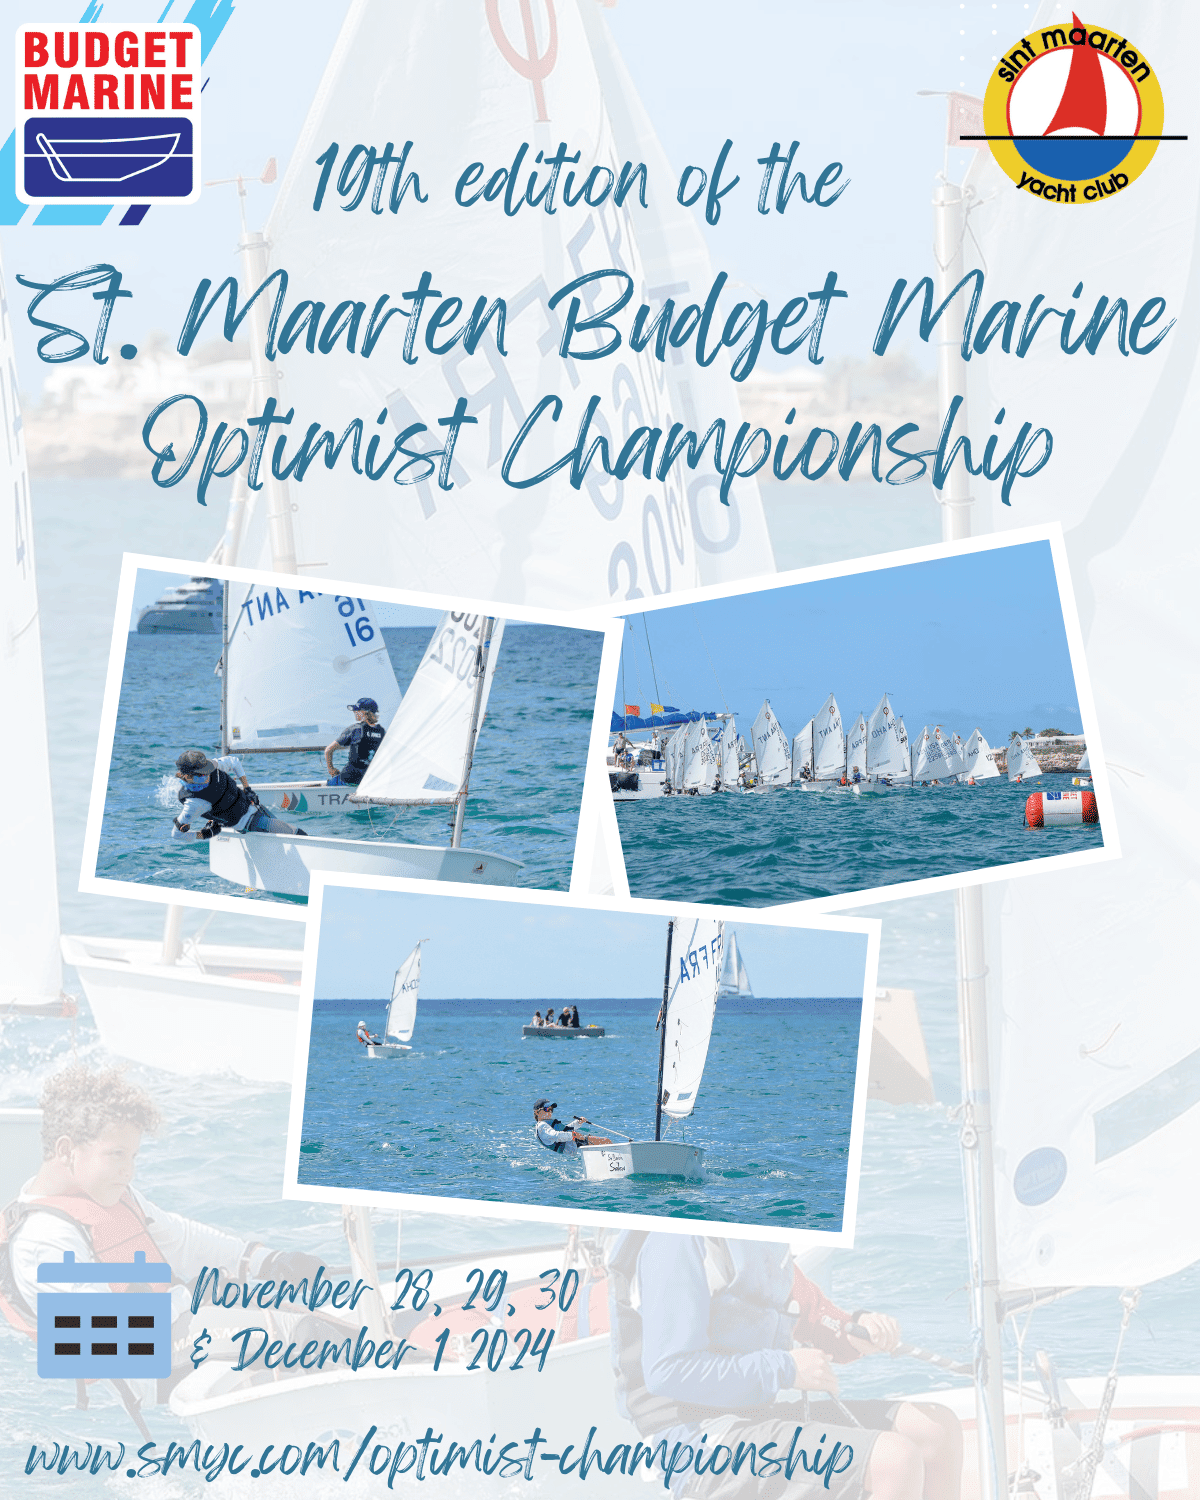 Sint Maarten Budget Marine Optimist Championship flyer